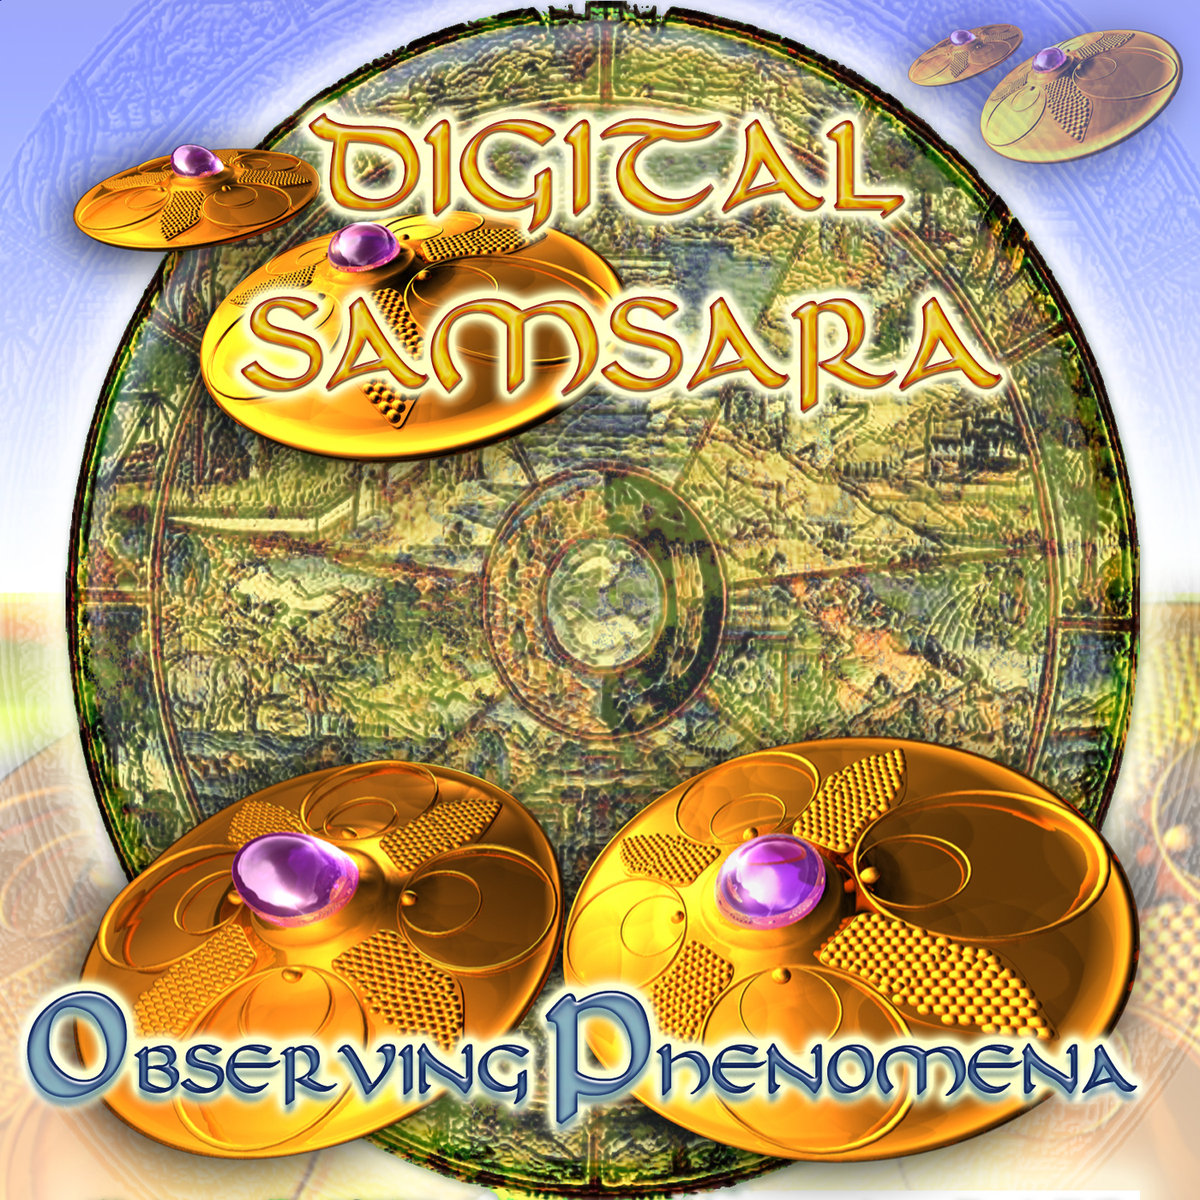 Digital Samsara - Riksha @ 'Observing Phenomena' album (electronic, goa)